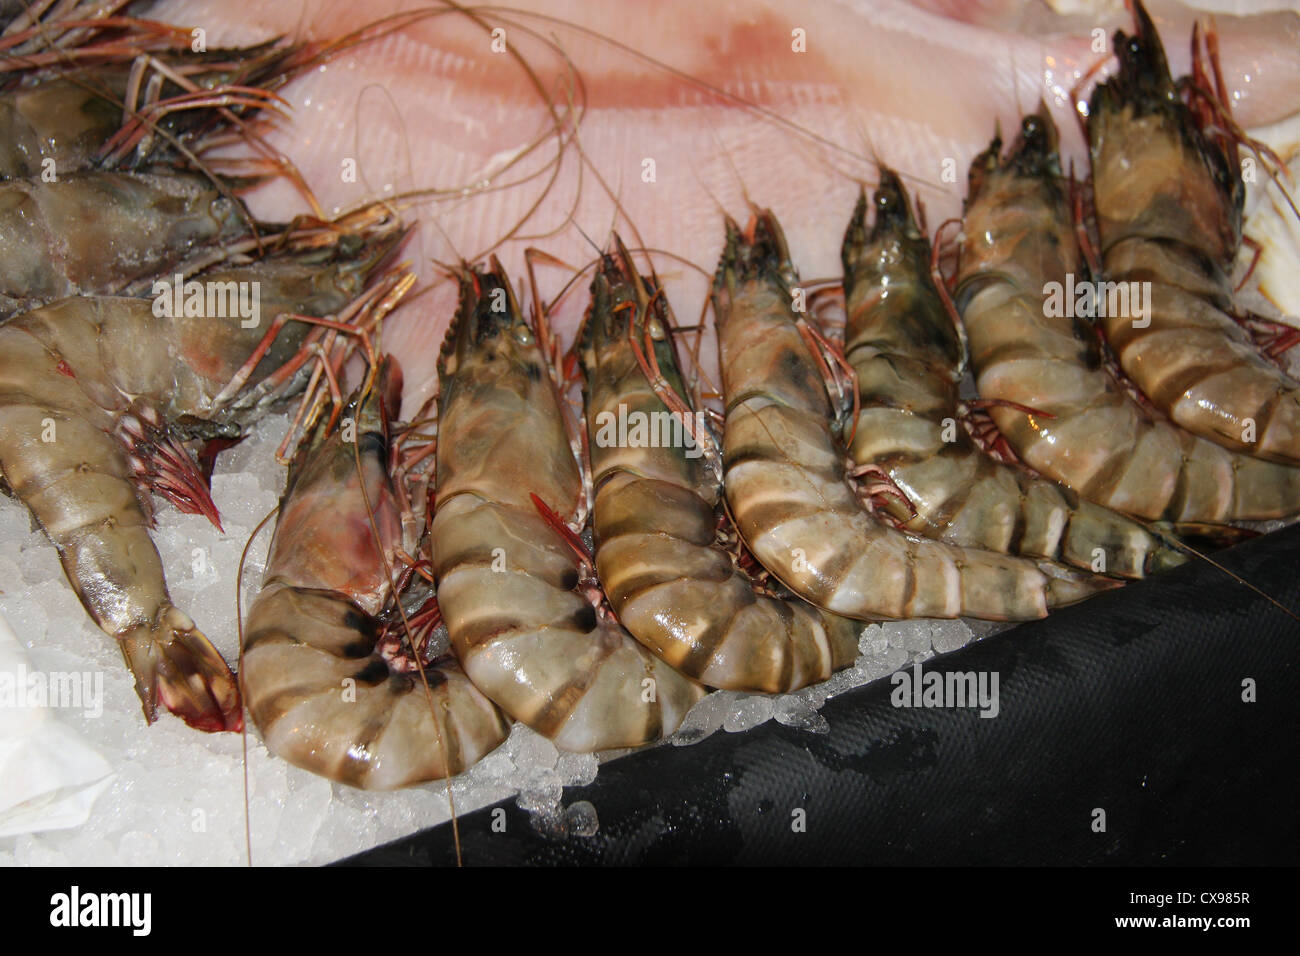 Giant tiger prawns on ice Stock Photo